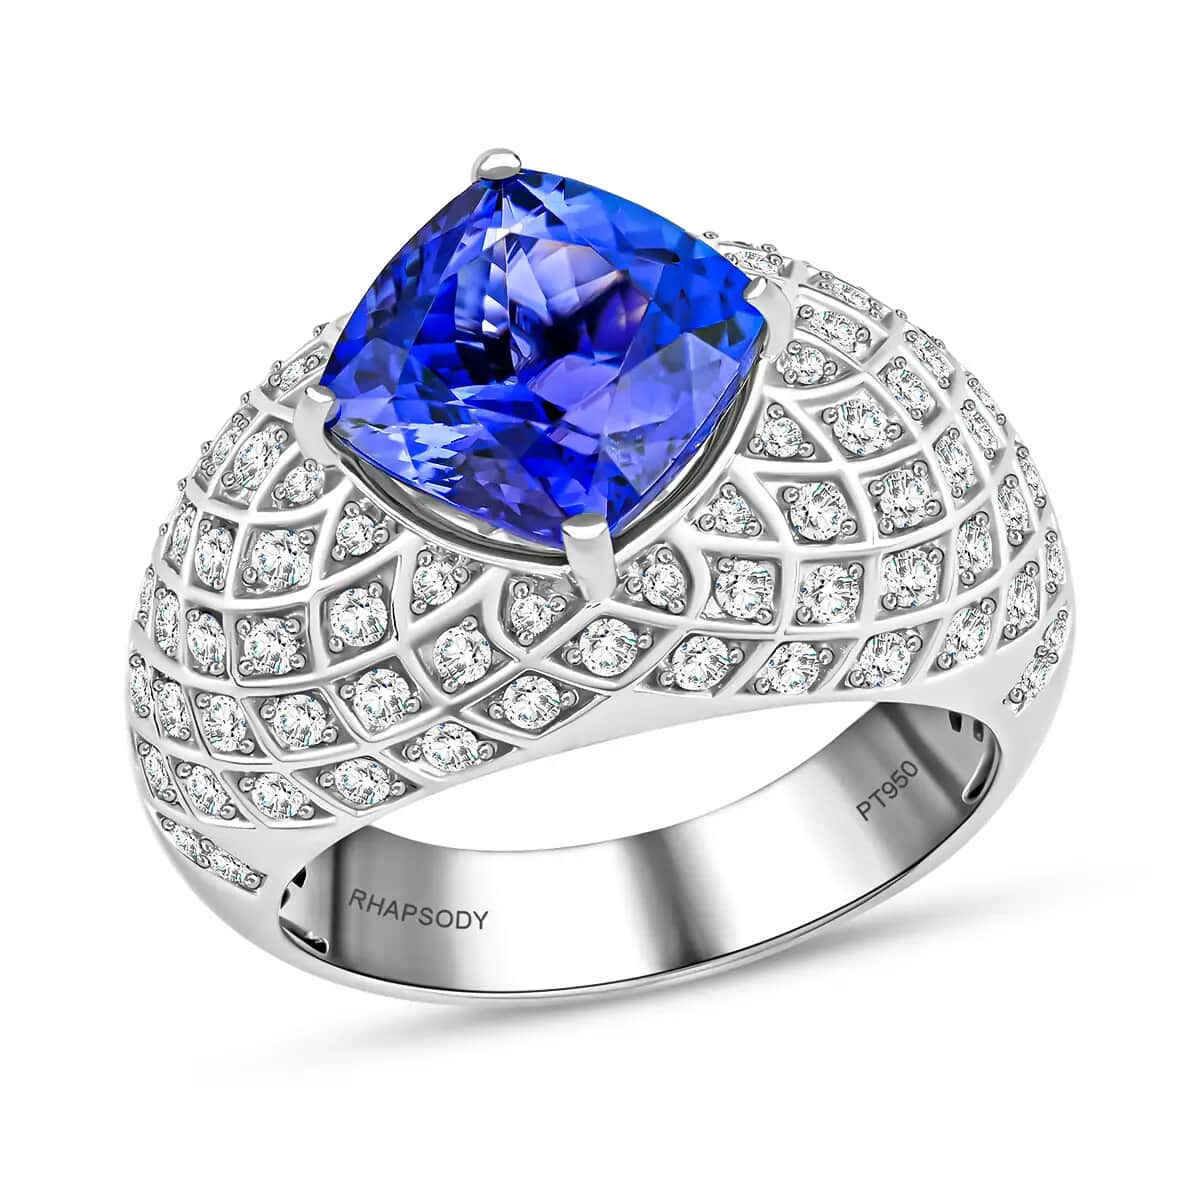 Rhapsody 950 Platinum AAAA Tanzanite, Diamond Ring, Cocktail Ring For Women 6.40 ctw image number 0